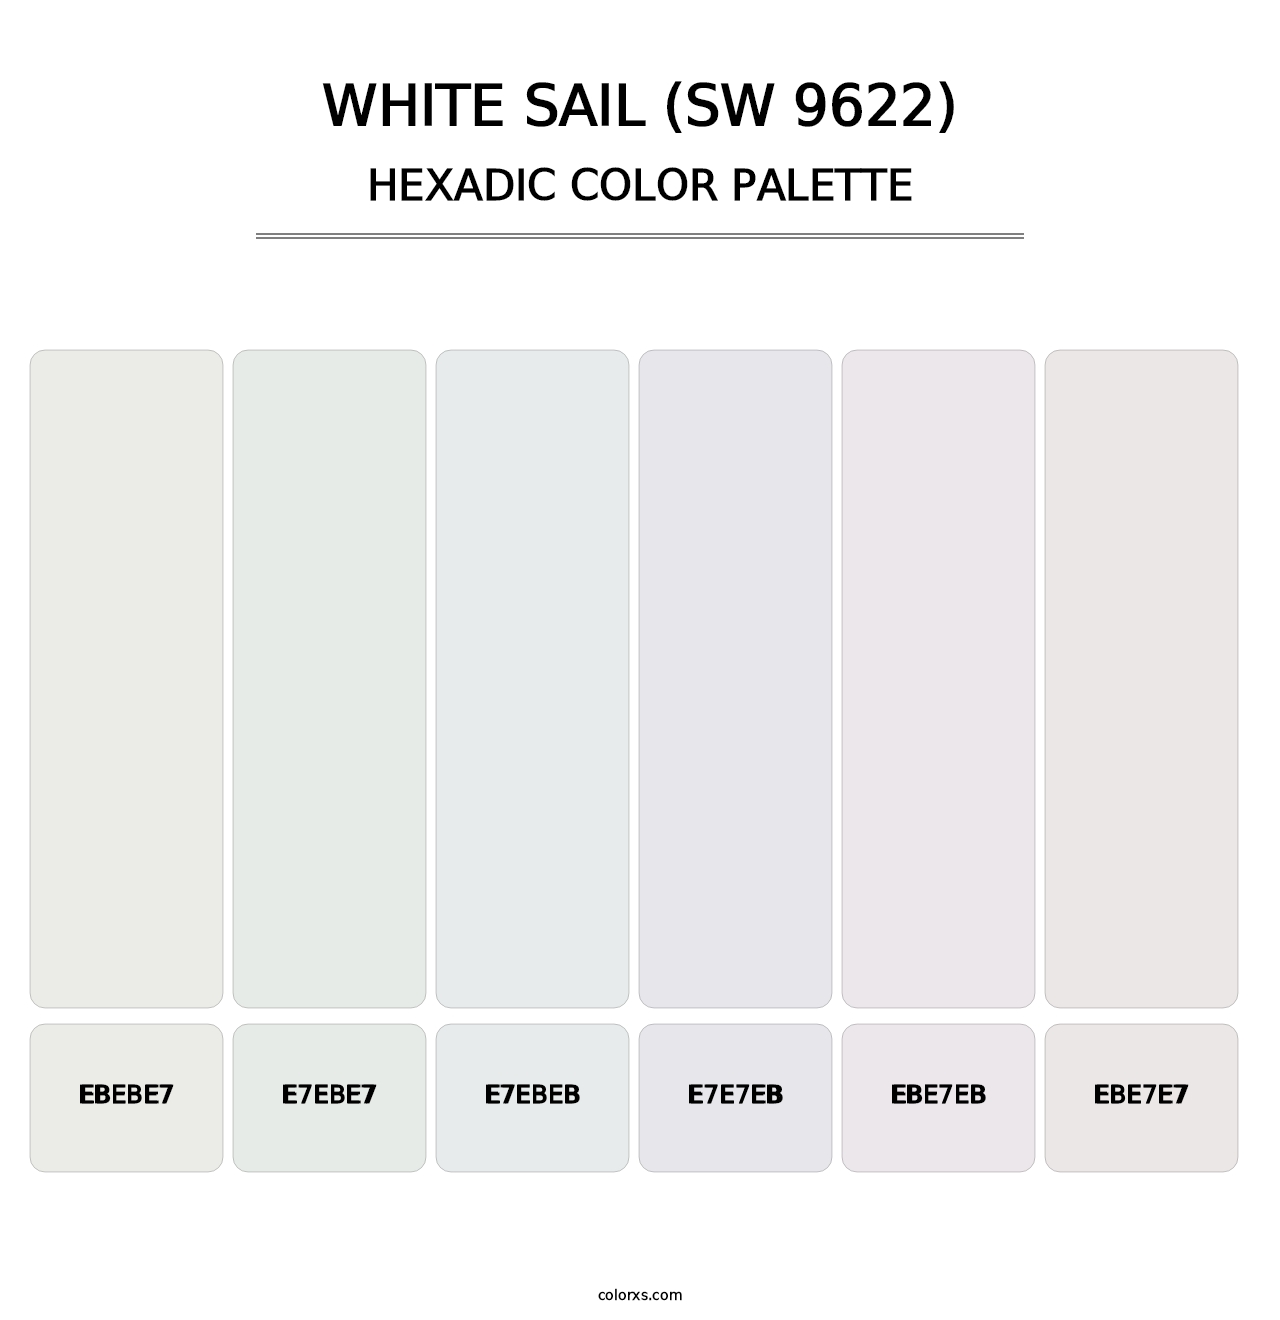 White Sail (SW 9622) - Hexadic Color Palette